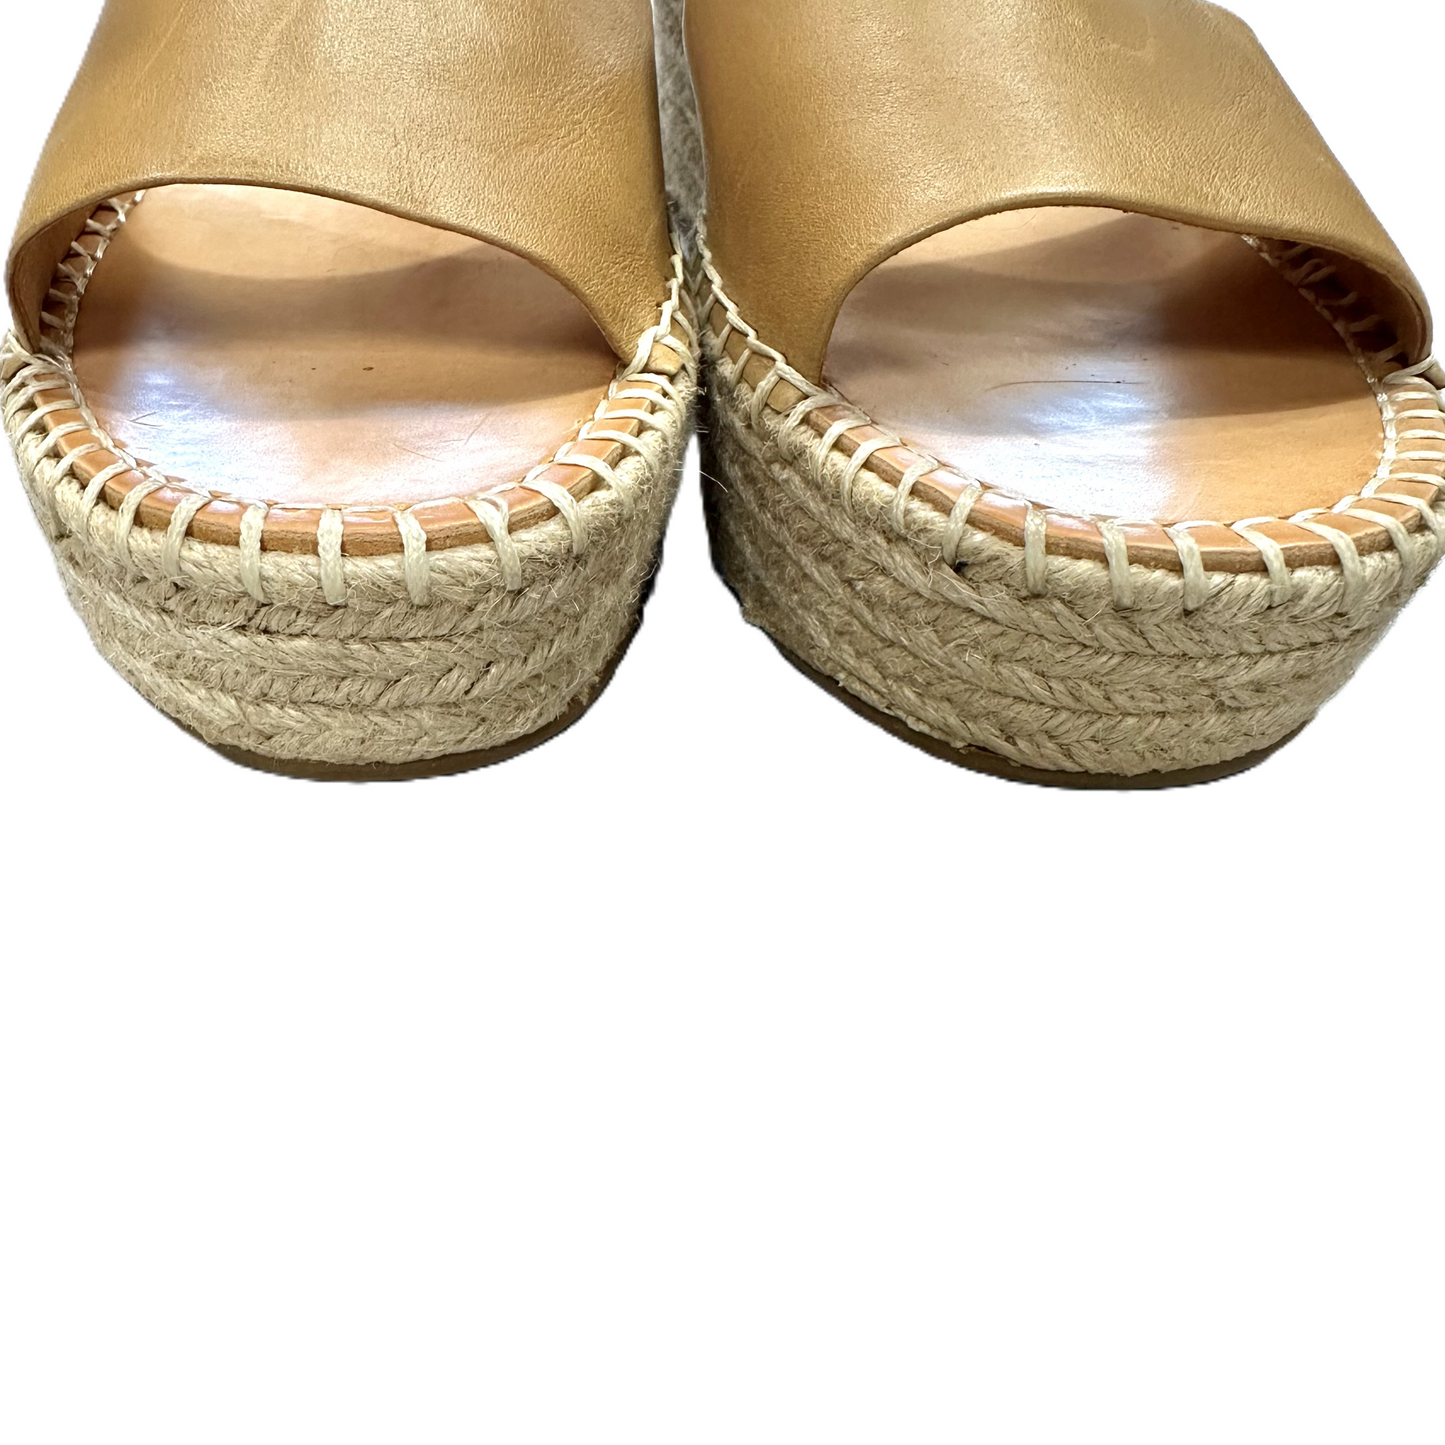 Tan Sandals Heels Wedge By Frye, Size: 9